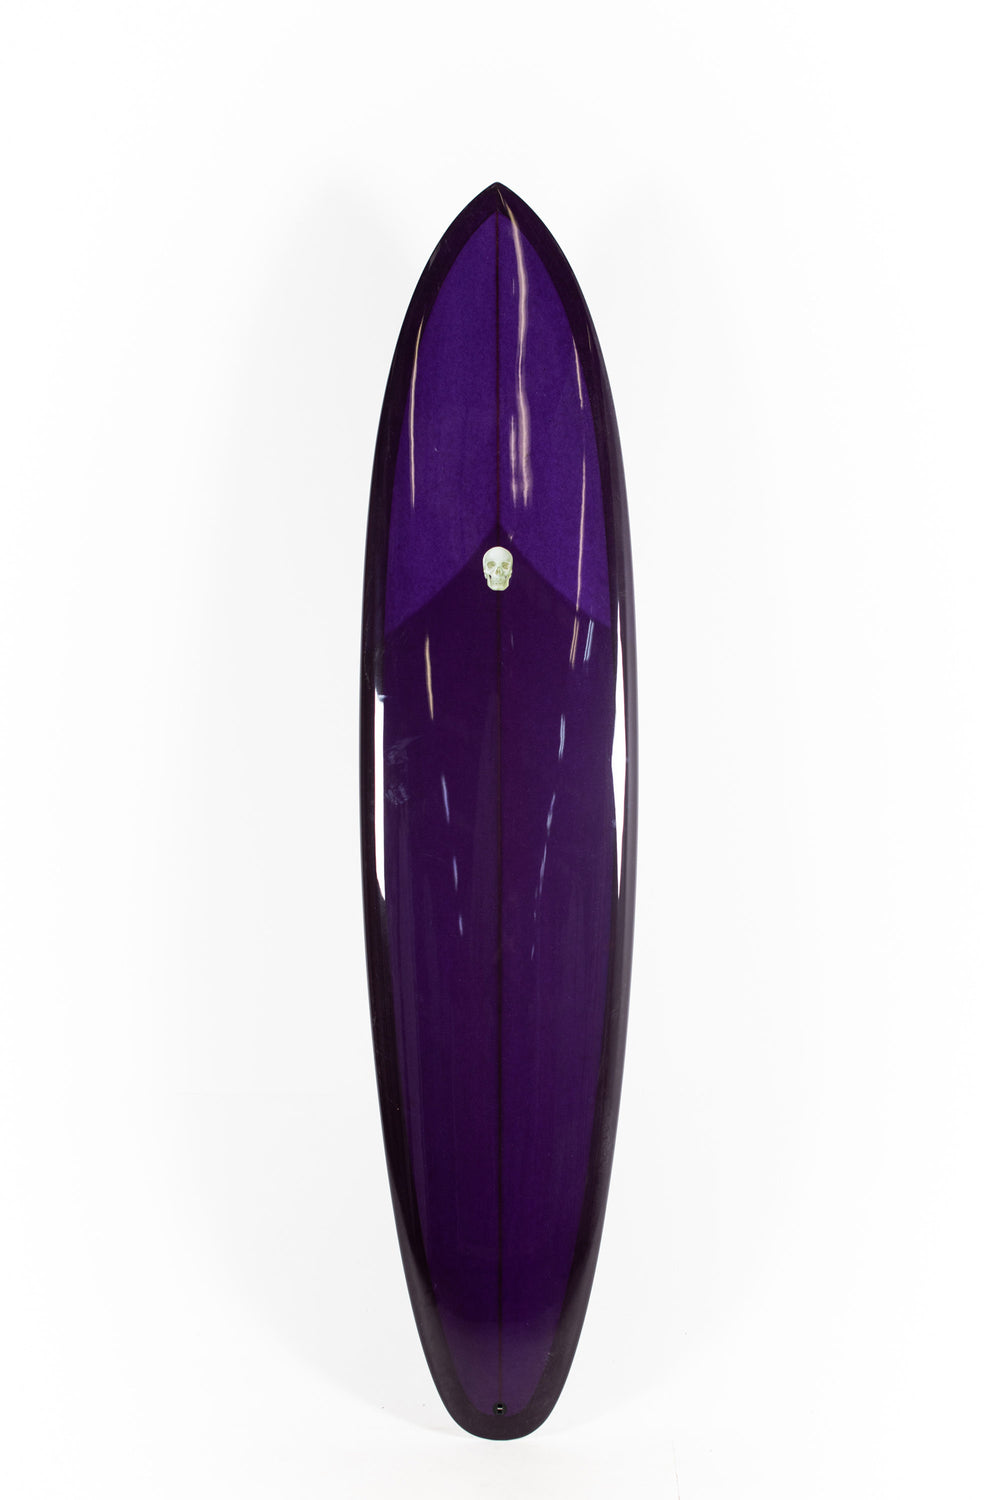 Pukas Surf Shop - Christenson Surfboards - TWIN TRACKER - 8'0